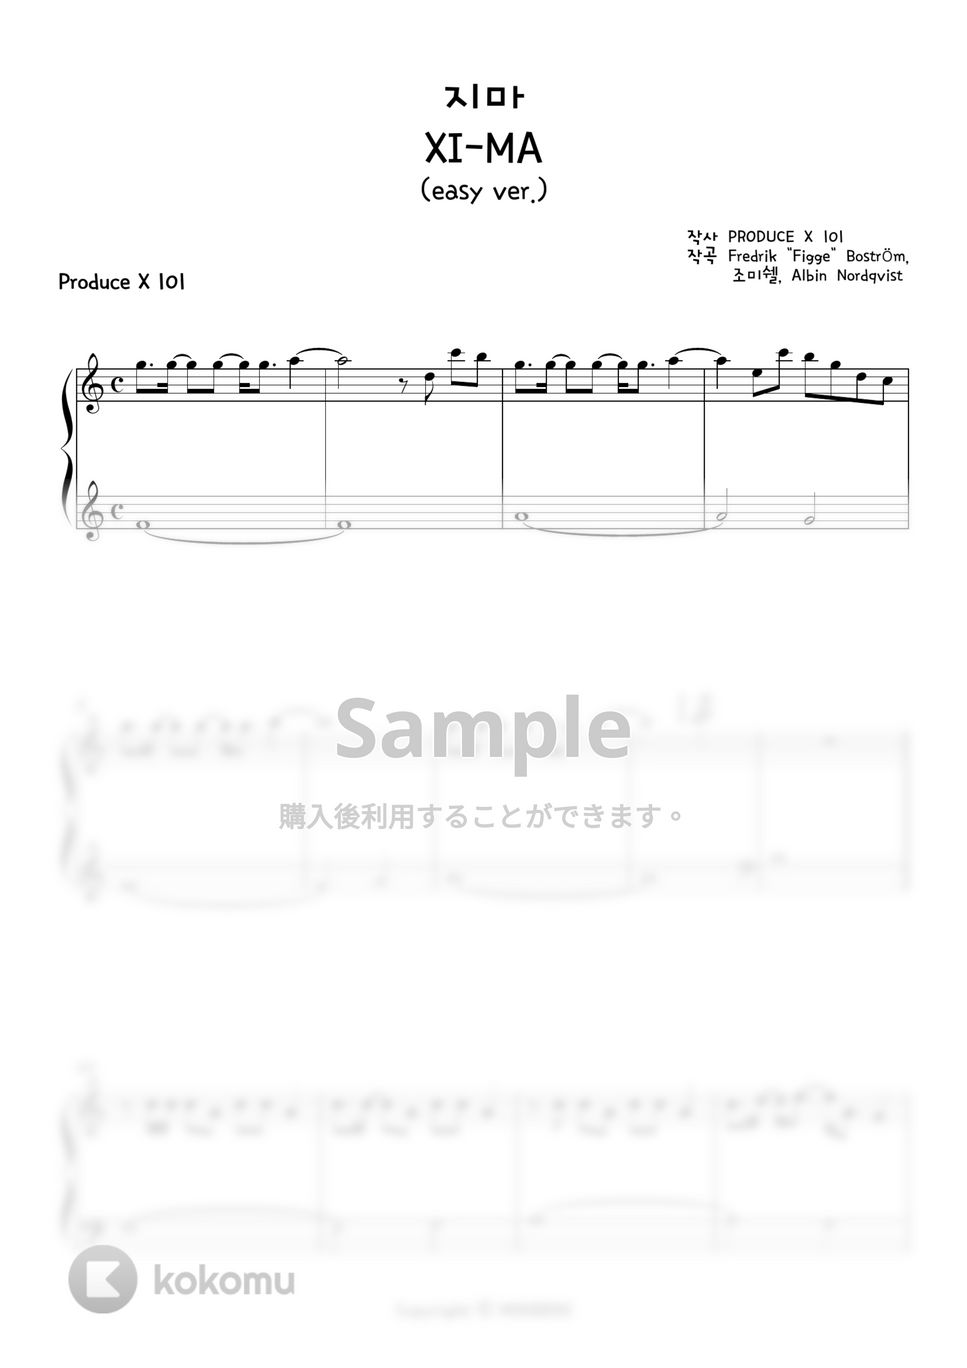 PRODUCE X 101 - X1-MA (Easy ver.) by MINIBINI